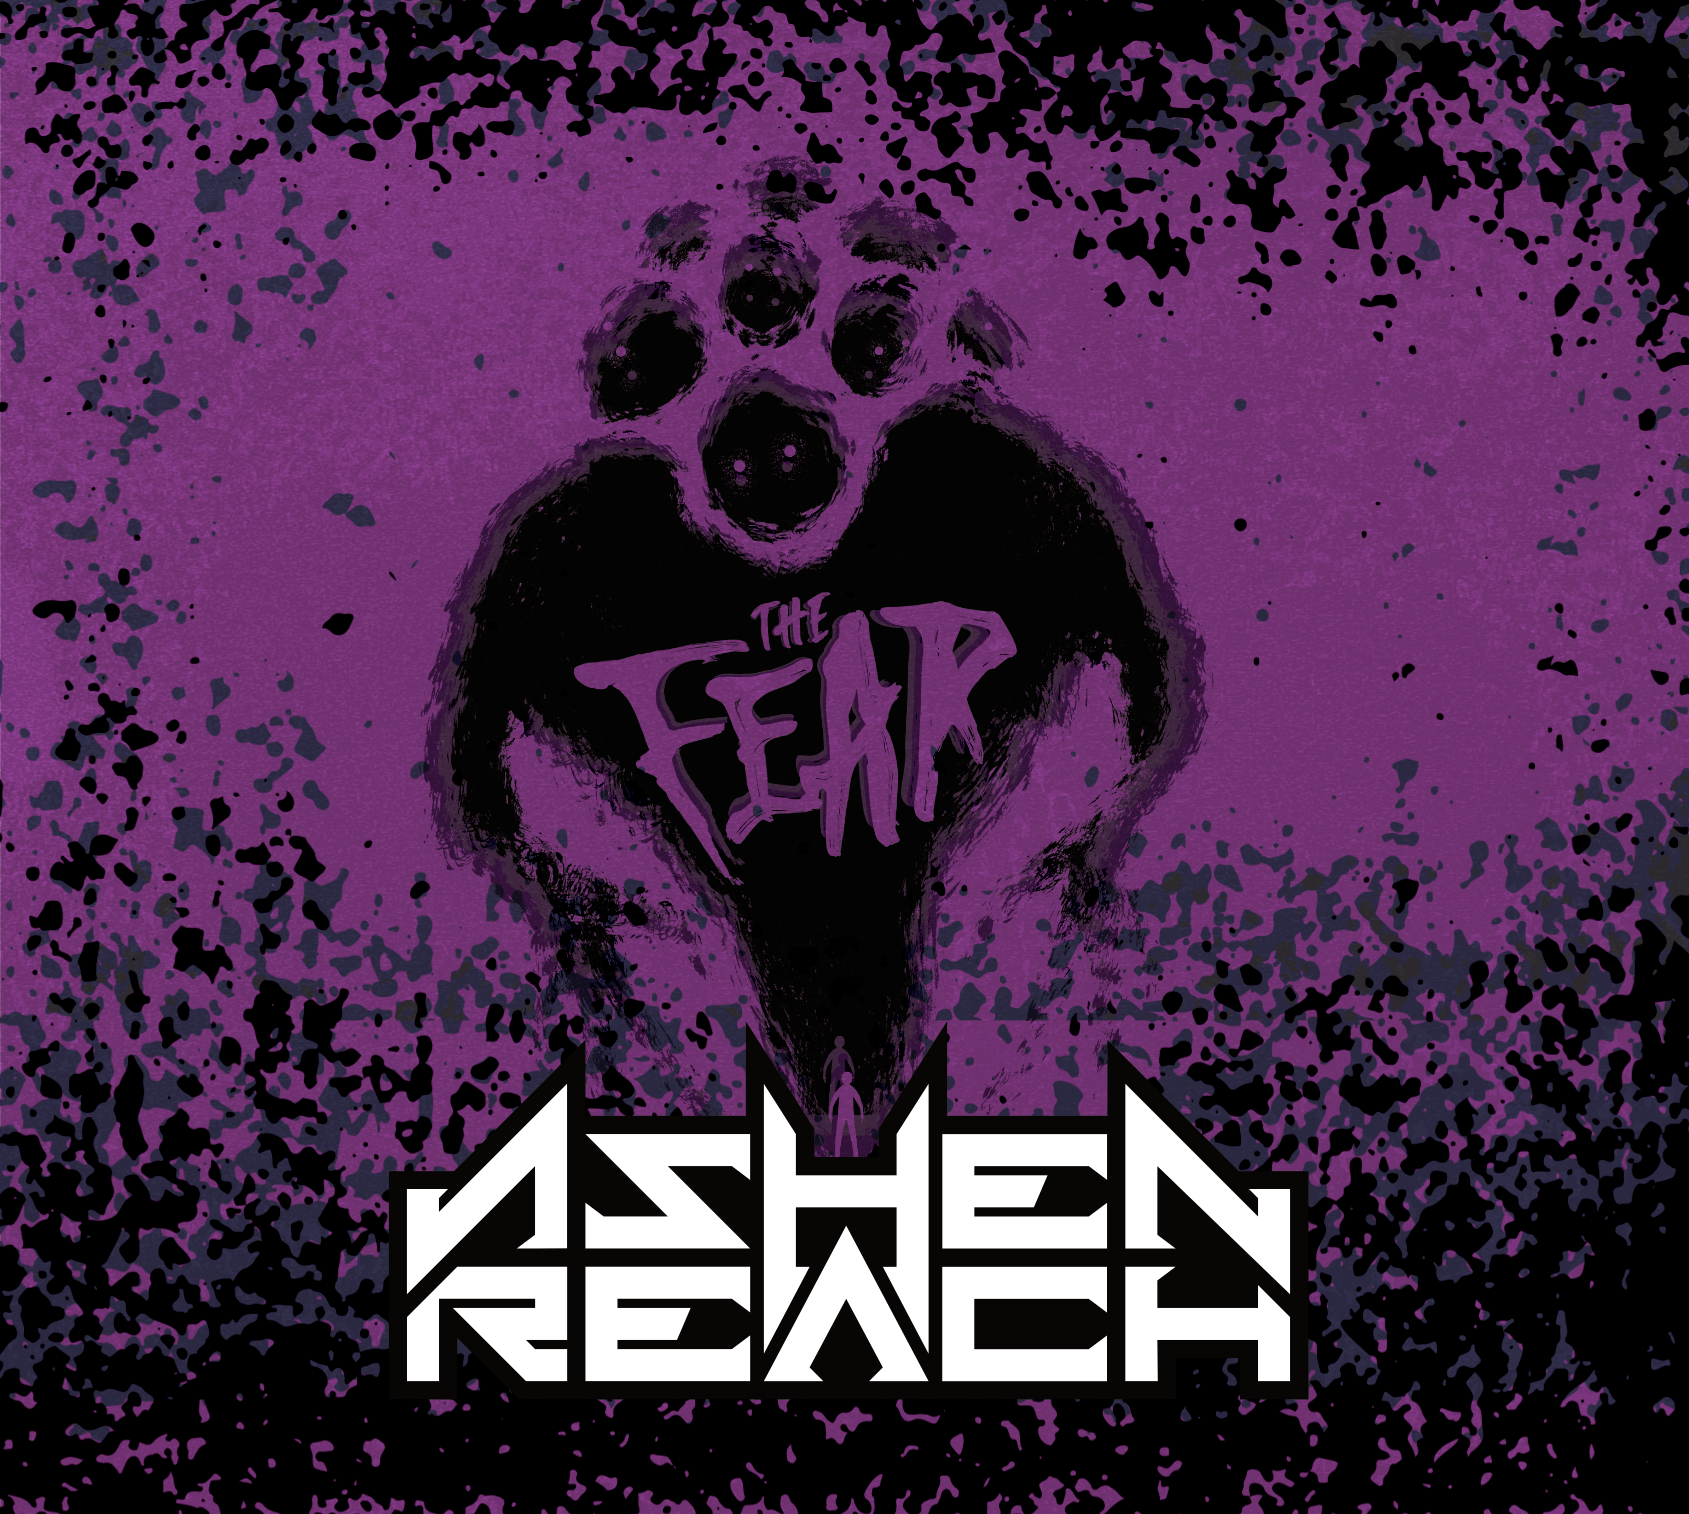 ASHEN REACH - THE FEAR E.P.